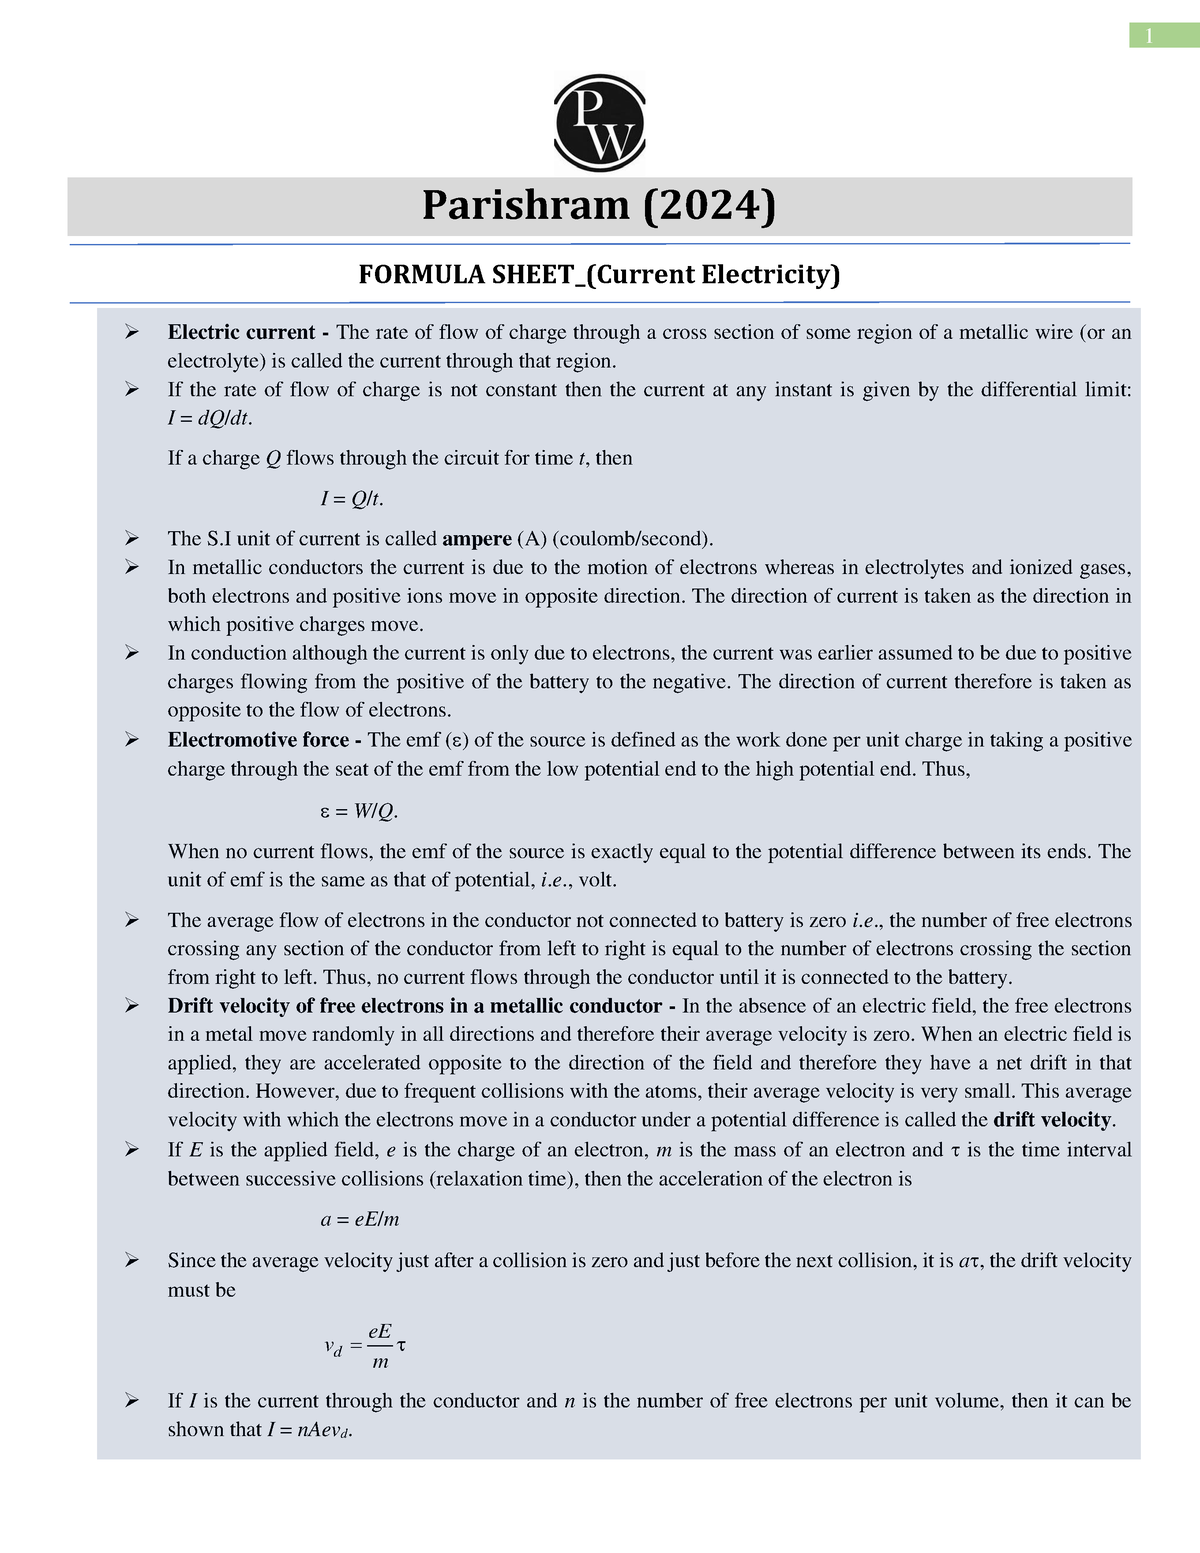 Current Electricity Formula Sheet Parishram 2024 Parishram (2024